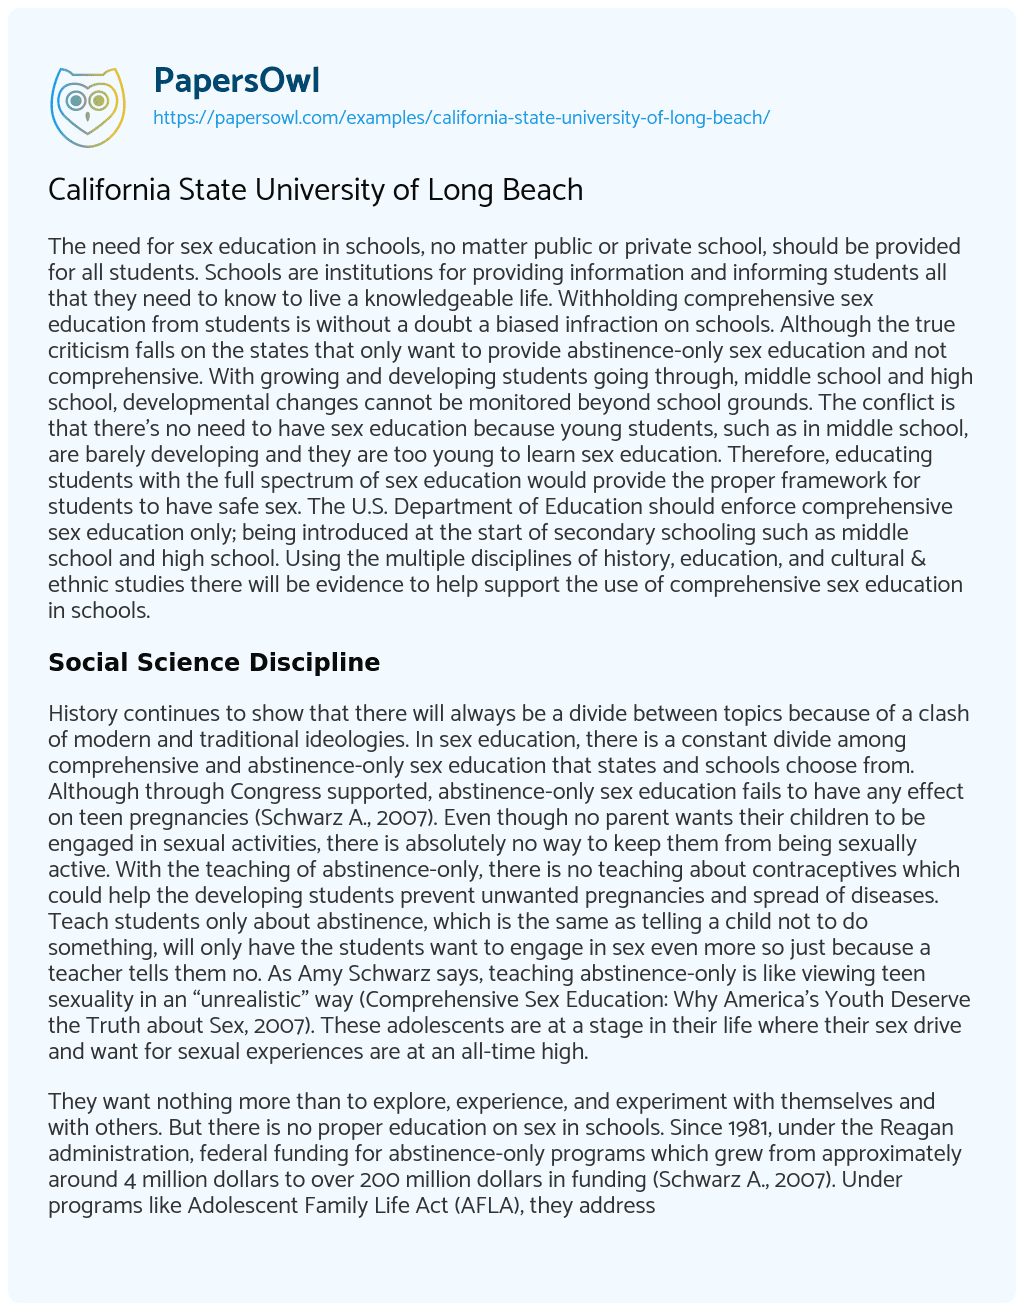 Essay on California State University of Long Beach